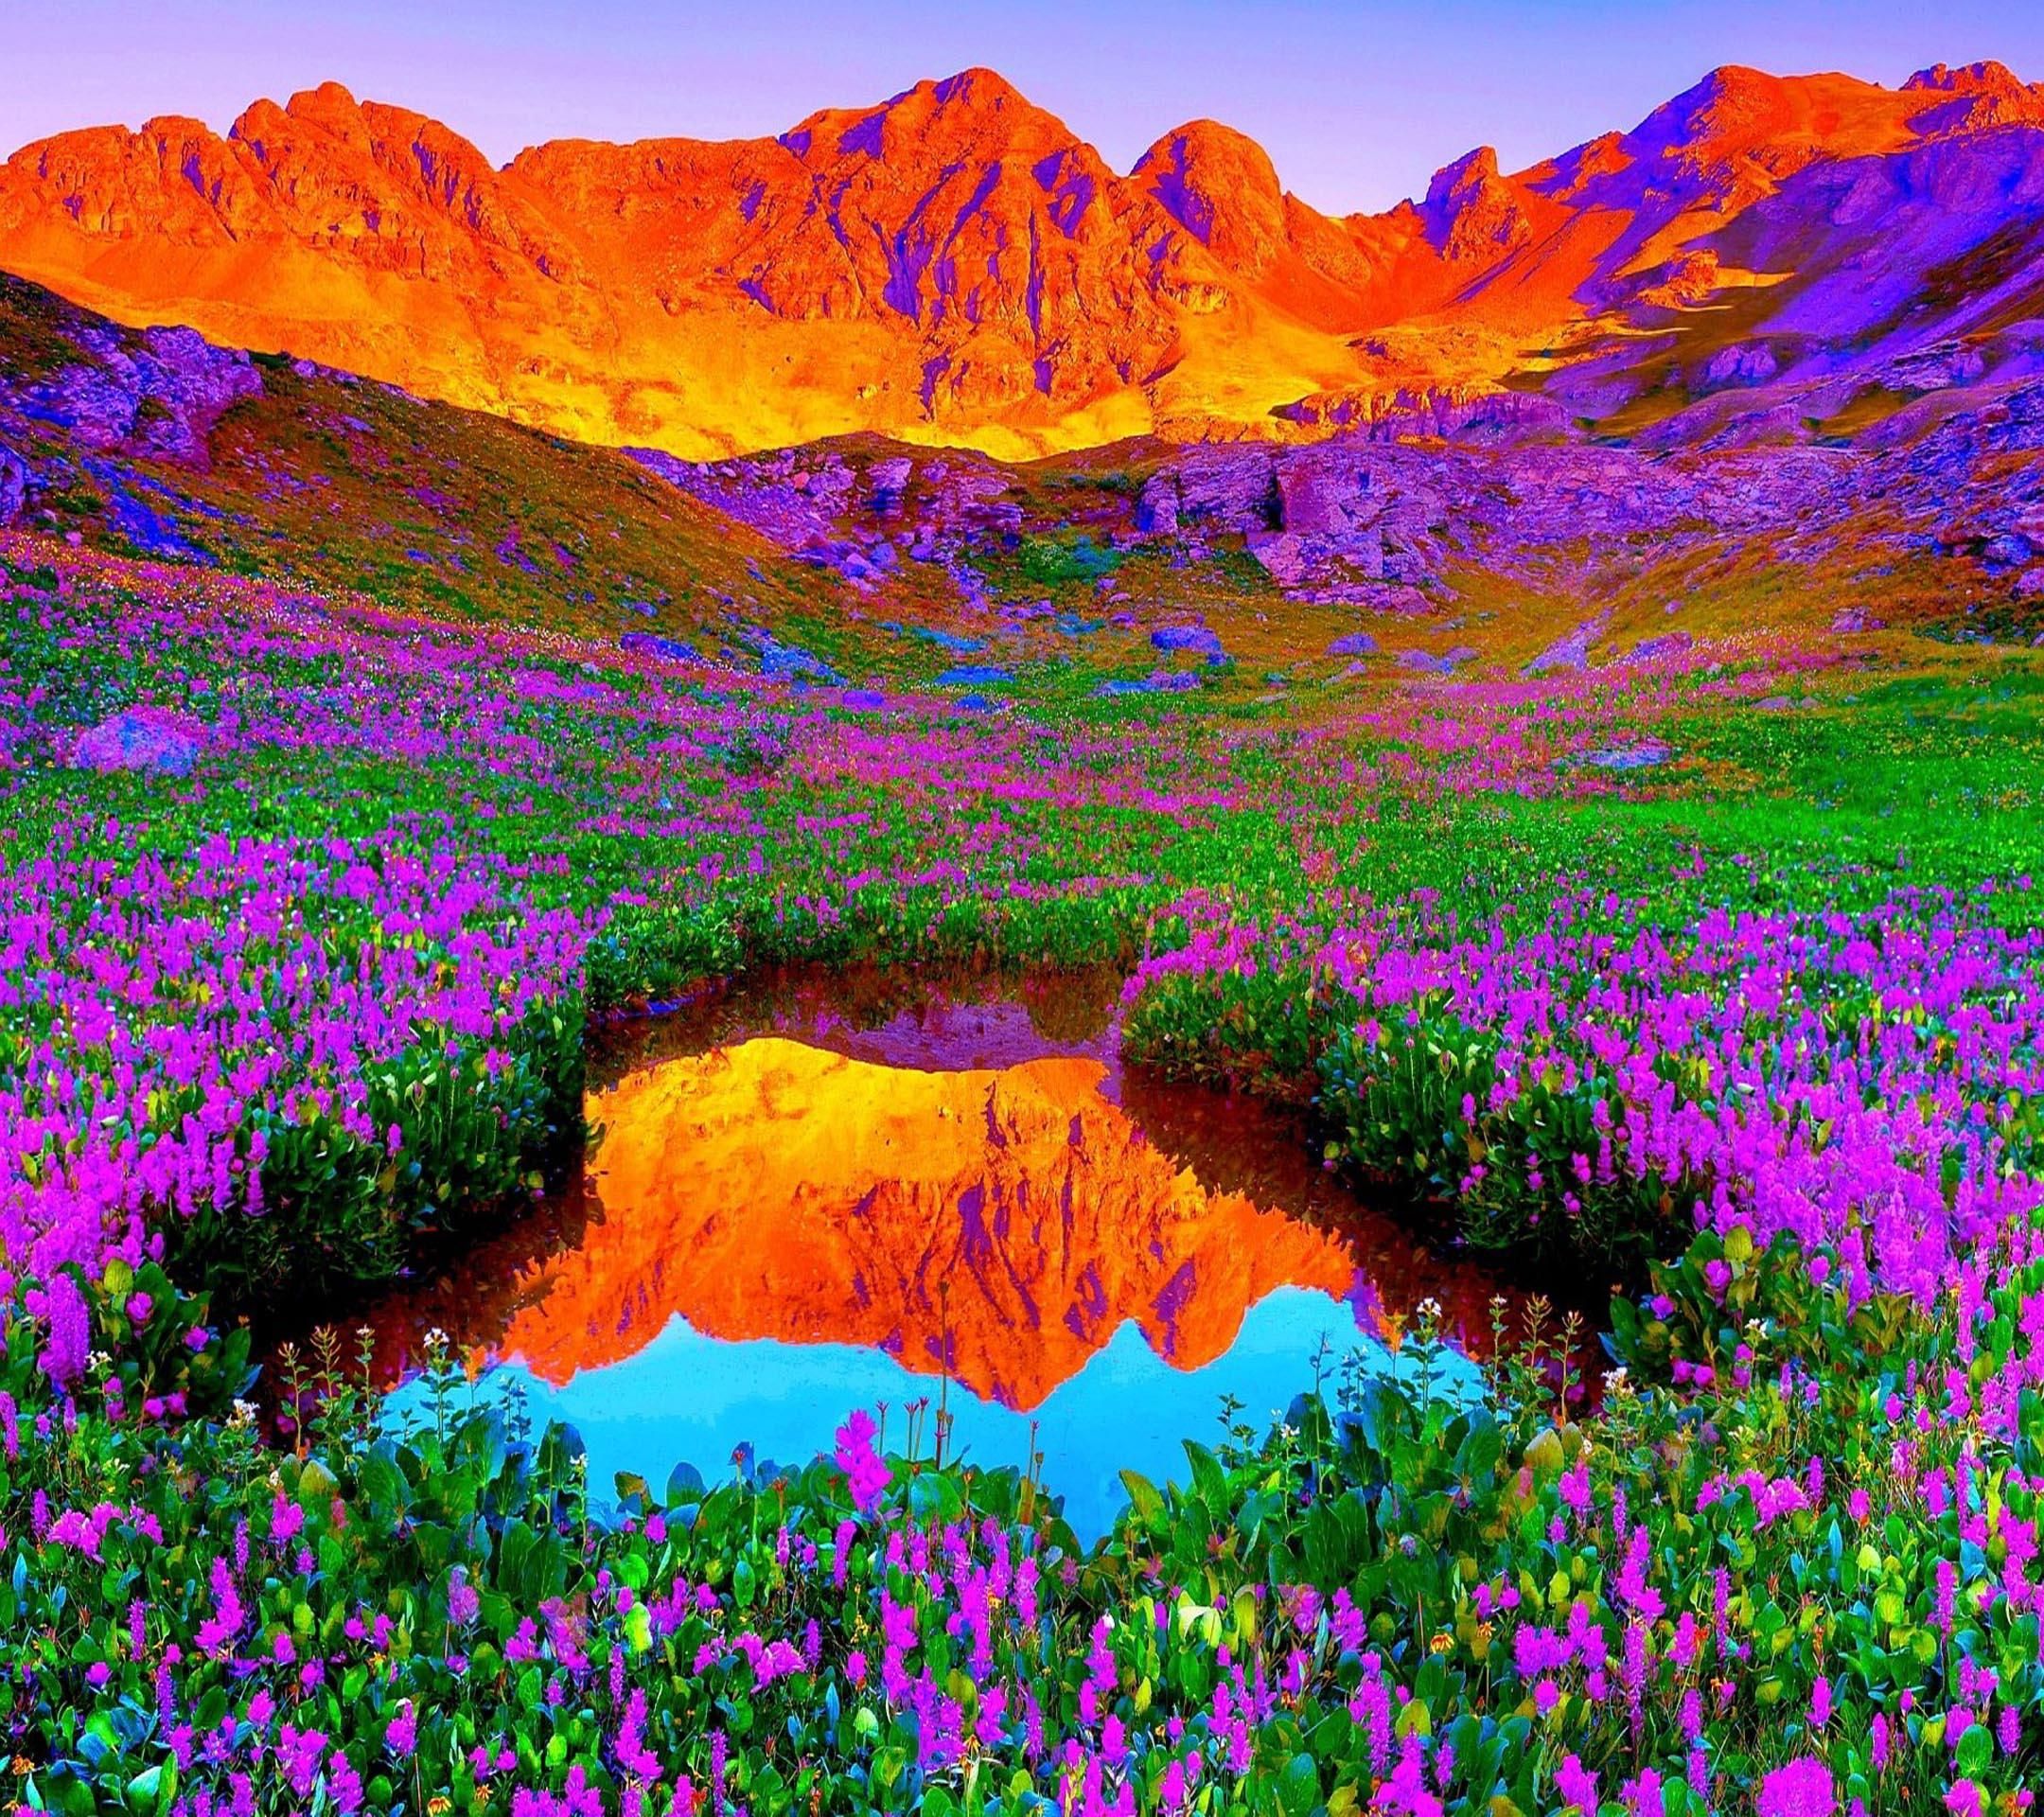 Colors of nature | Peaceful Paradise | Pinterest | Paradise